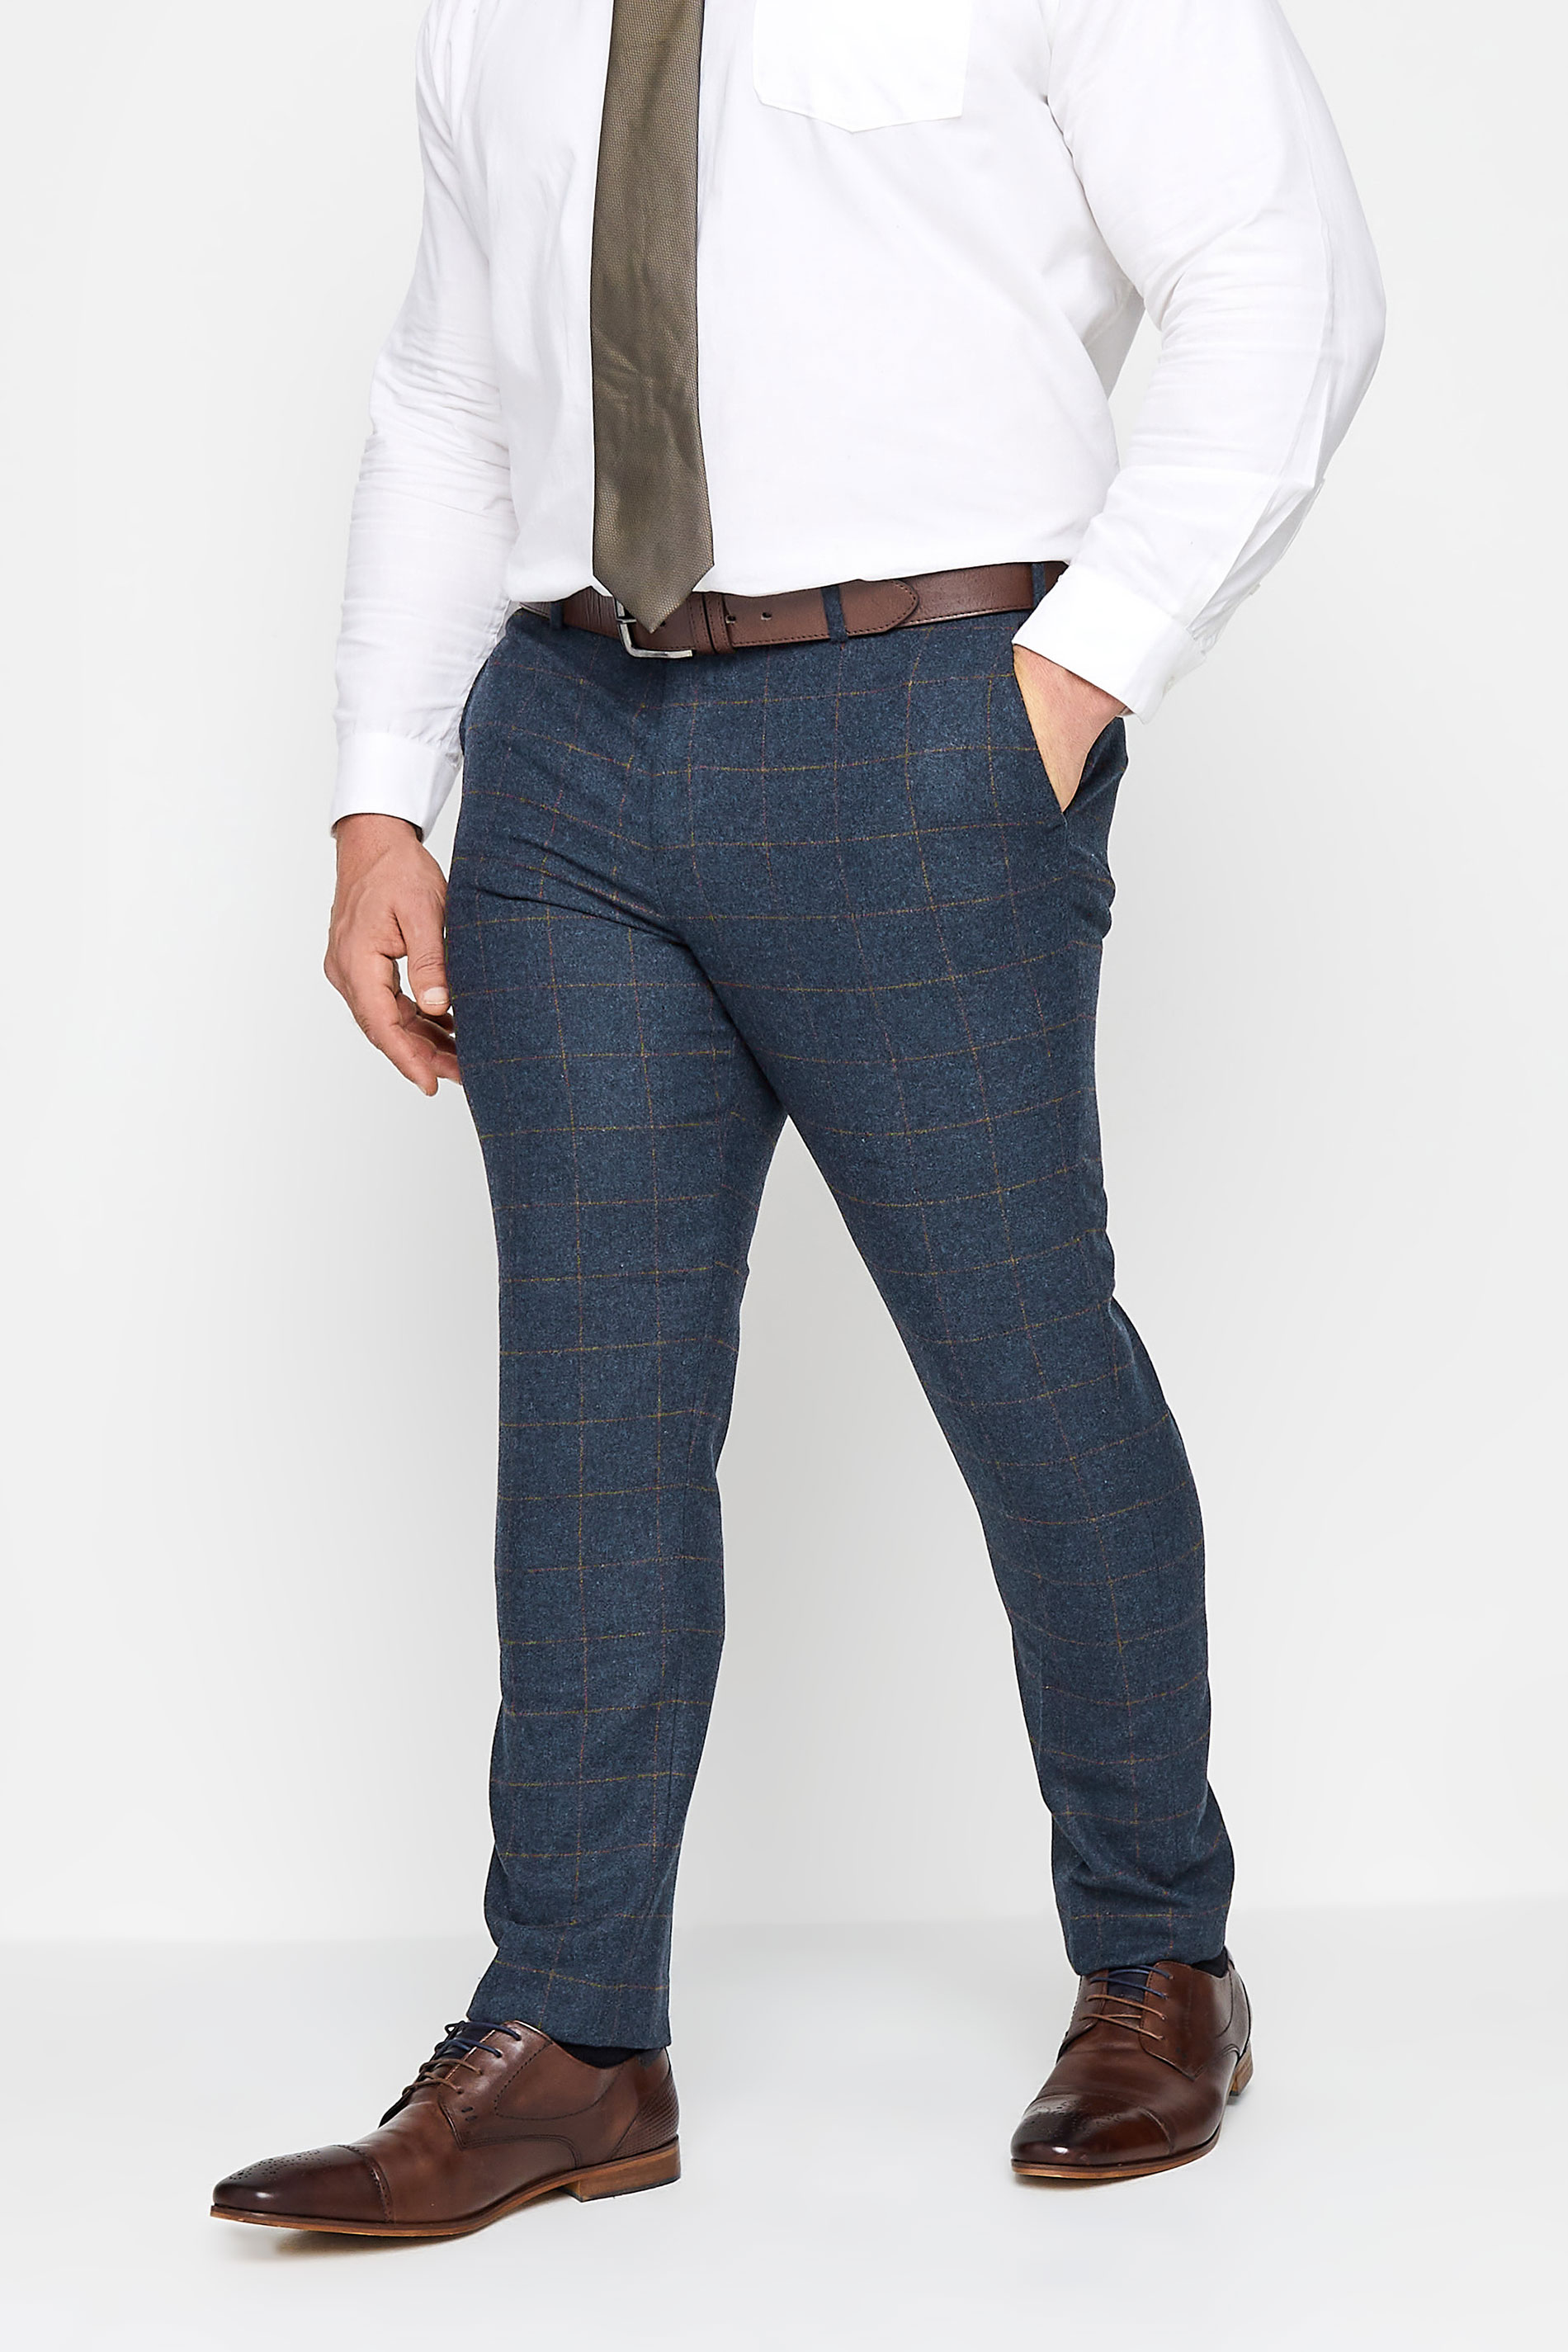 BadRhino Big & Tall Blue Tweed Check Suit Trousers | BadRhino 3